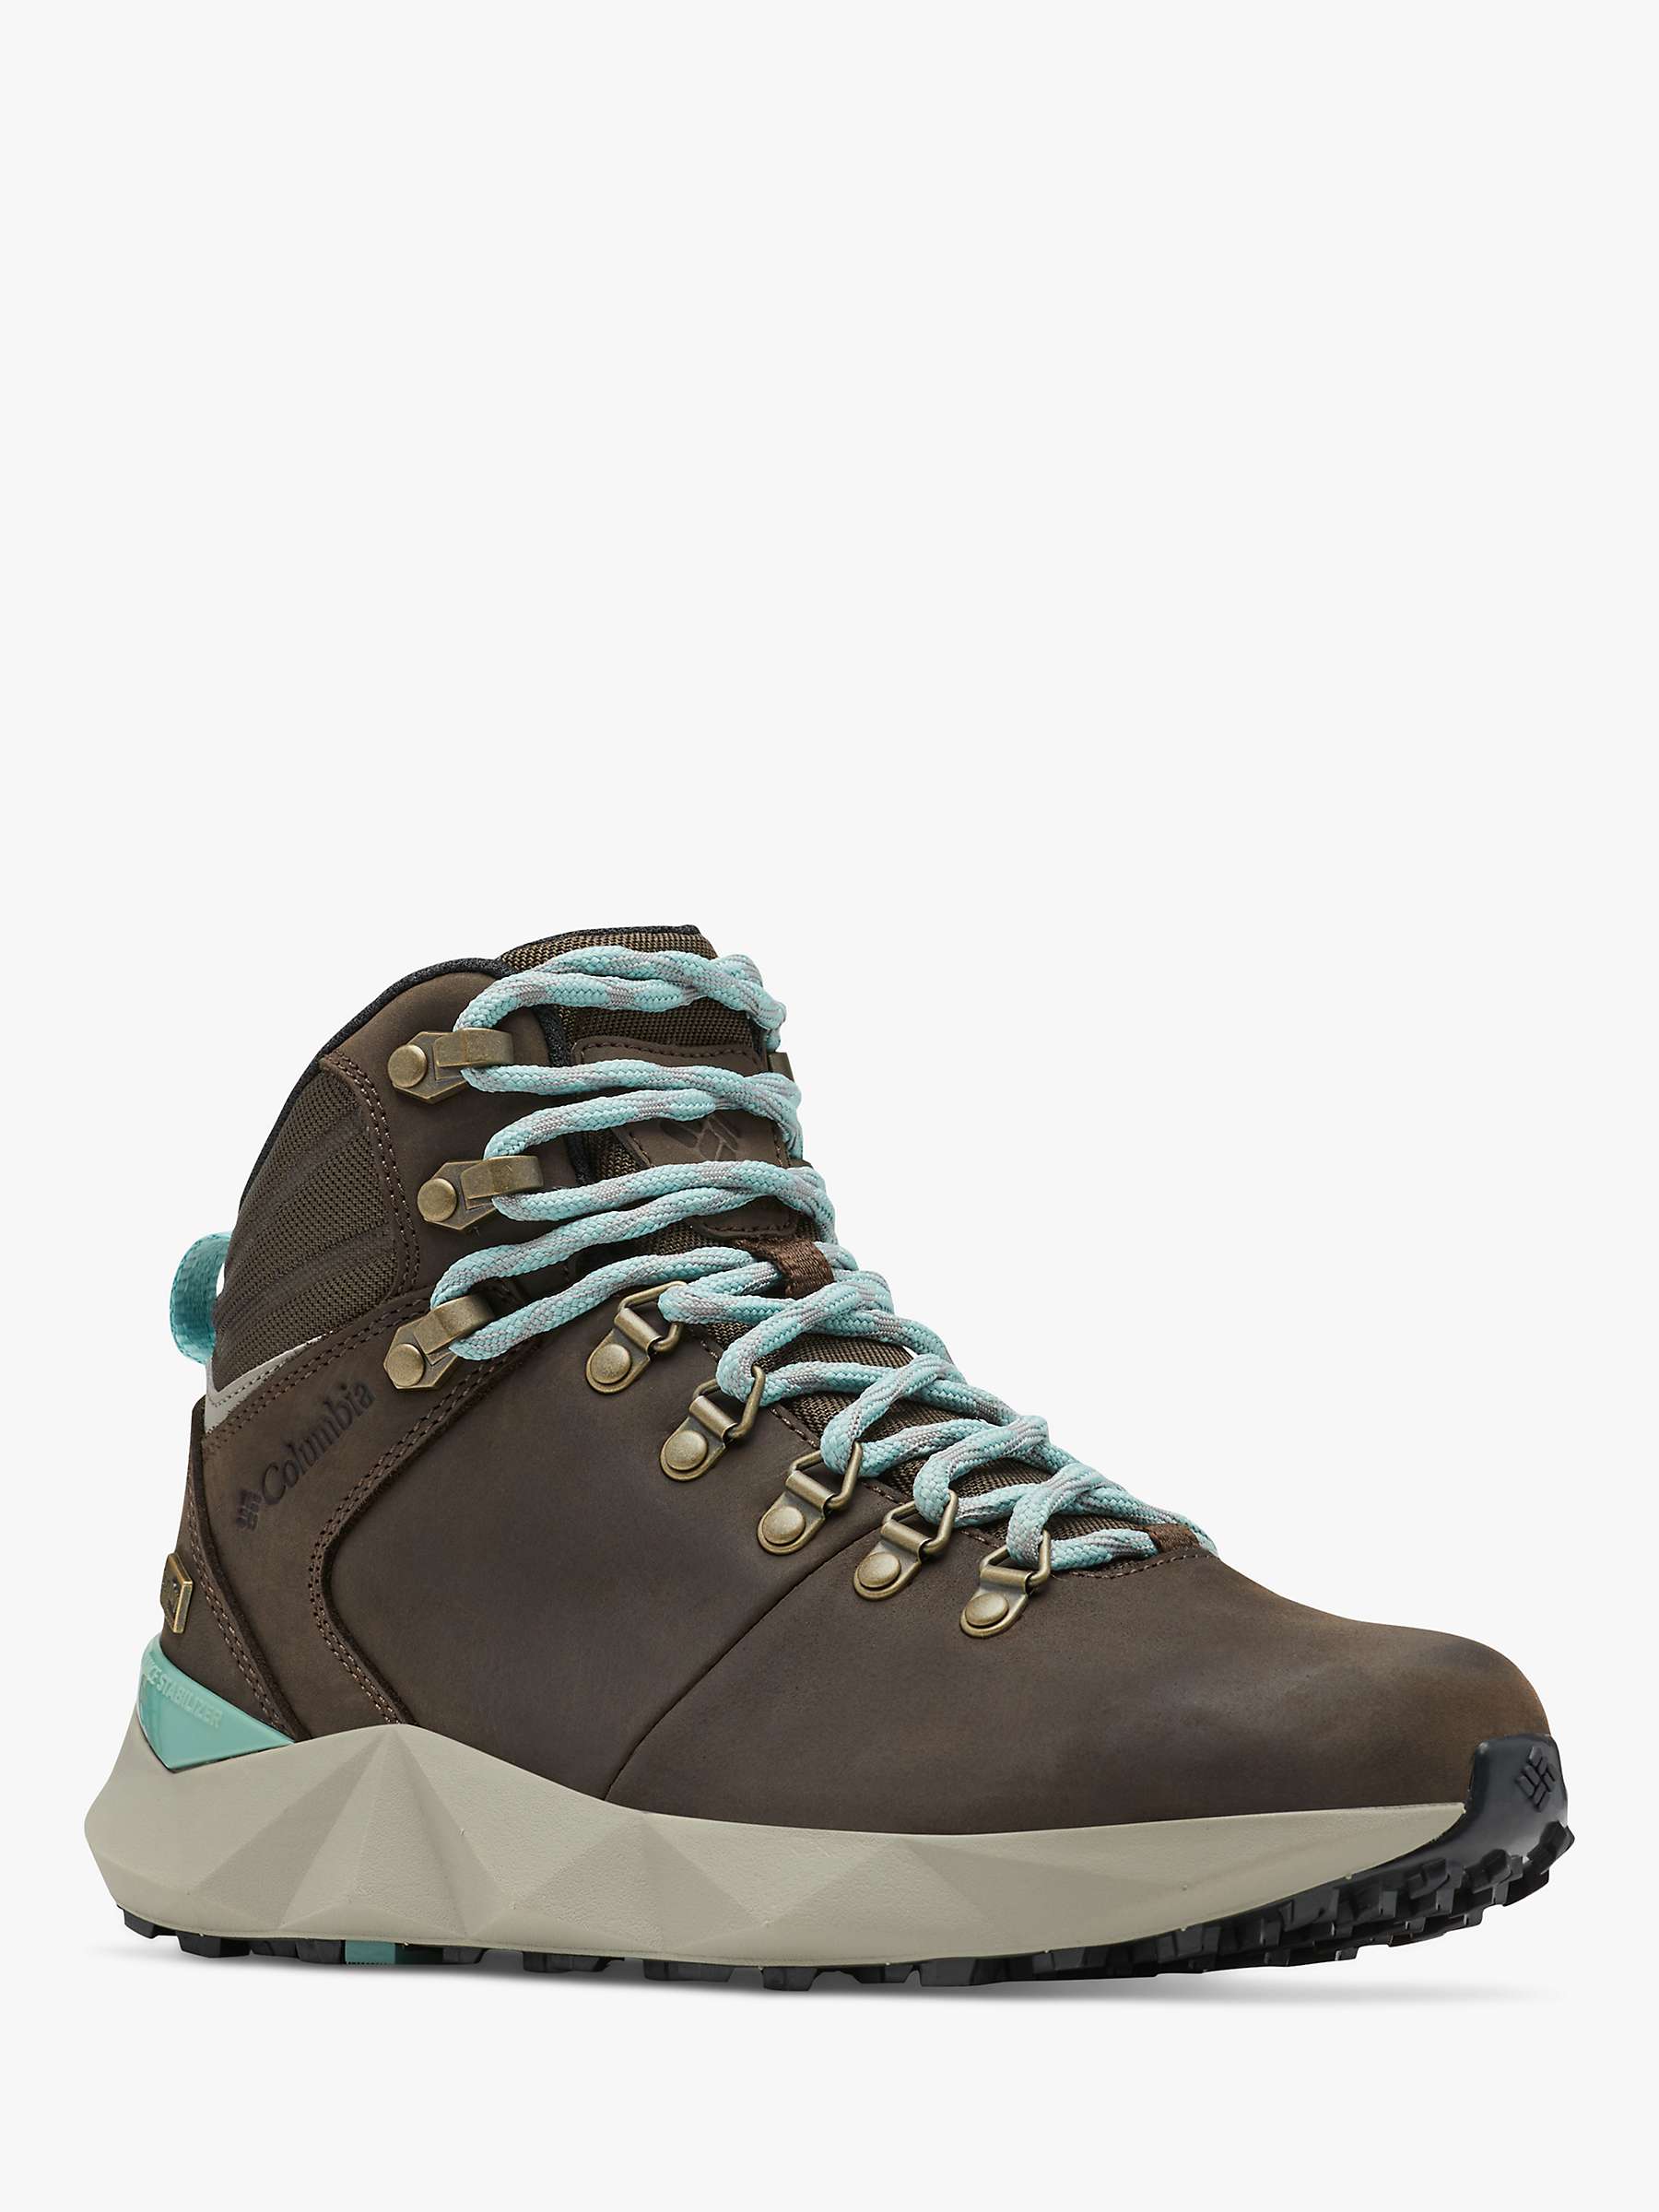 Buy Columbia Facet™ Sierra Outdry™ Women's Waterproof Walking Boots Online at johnlewis.com